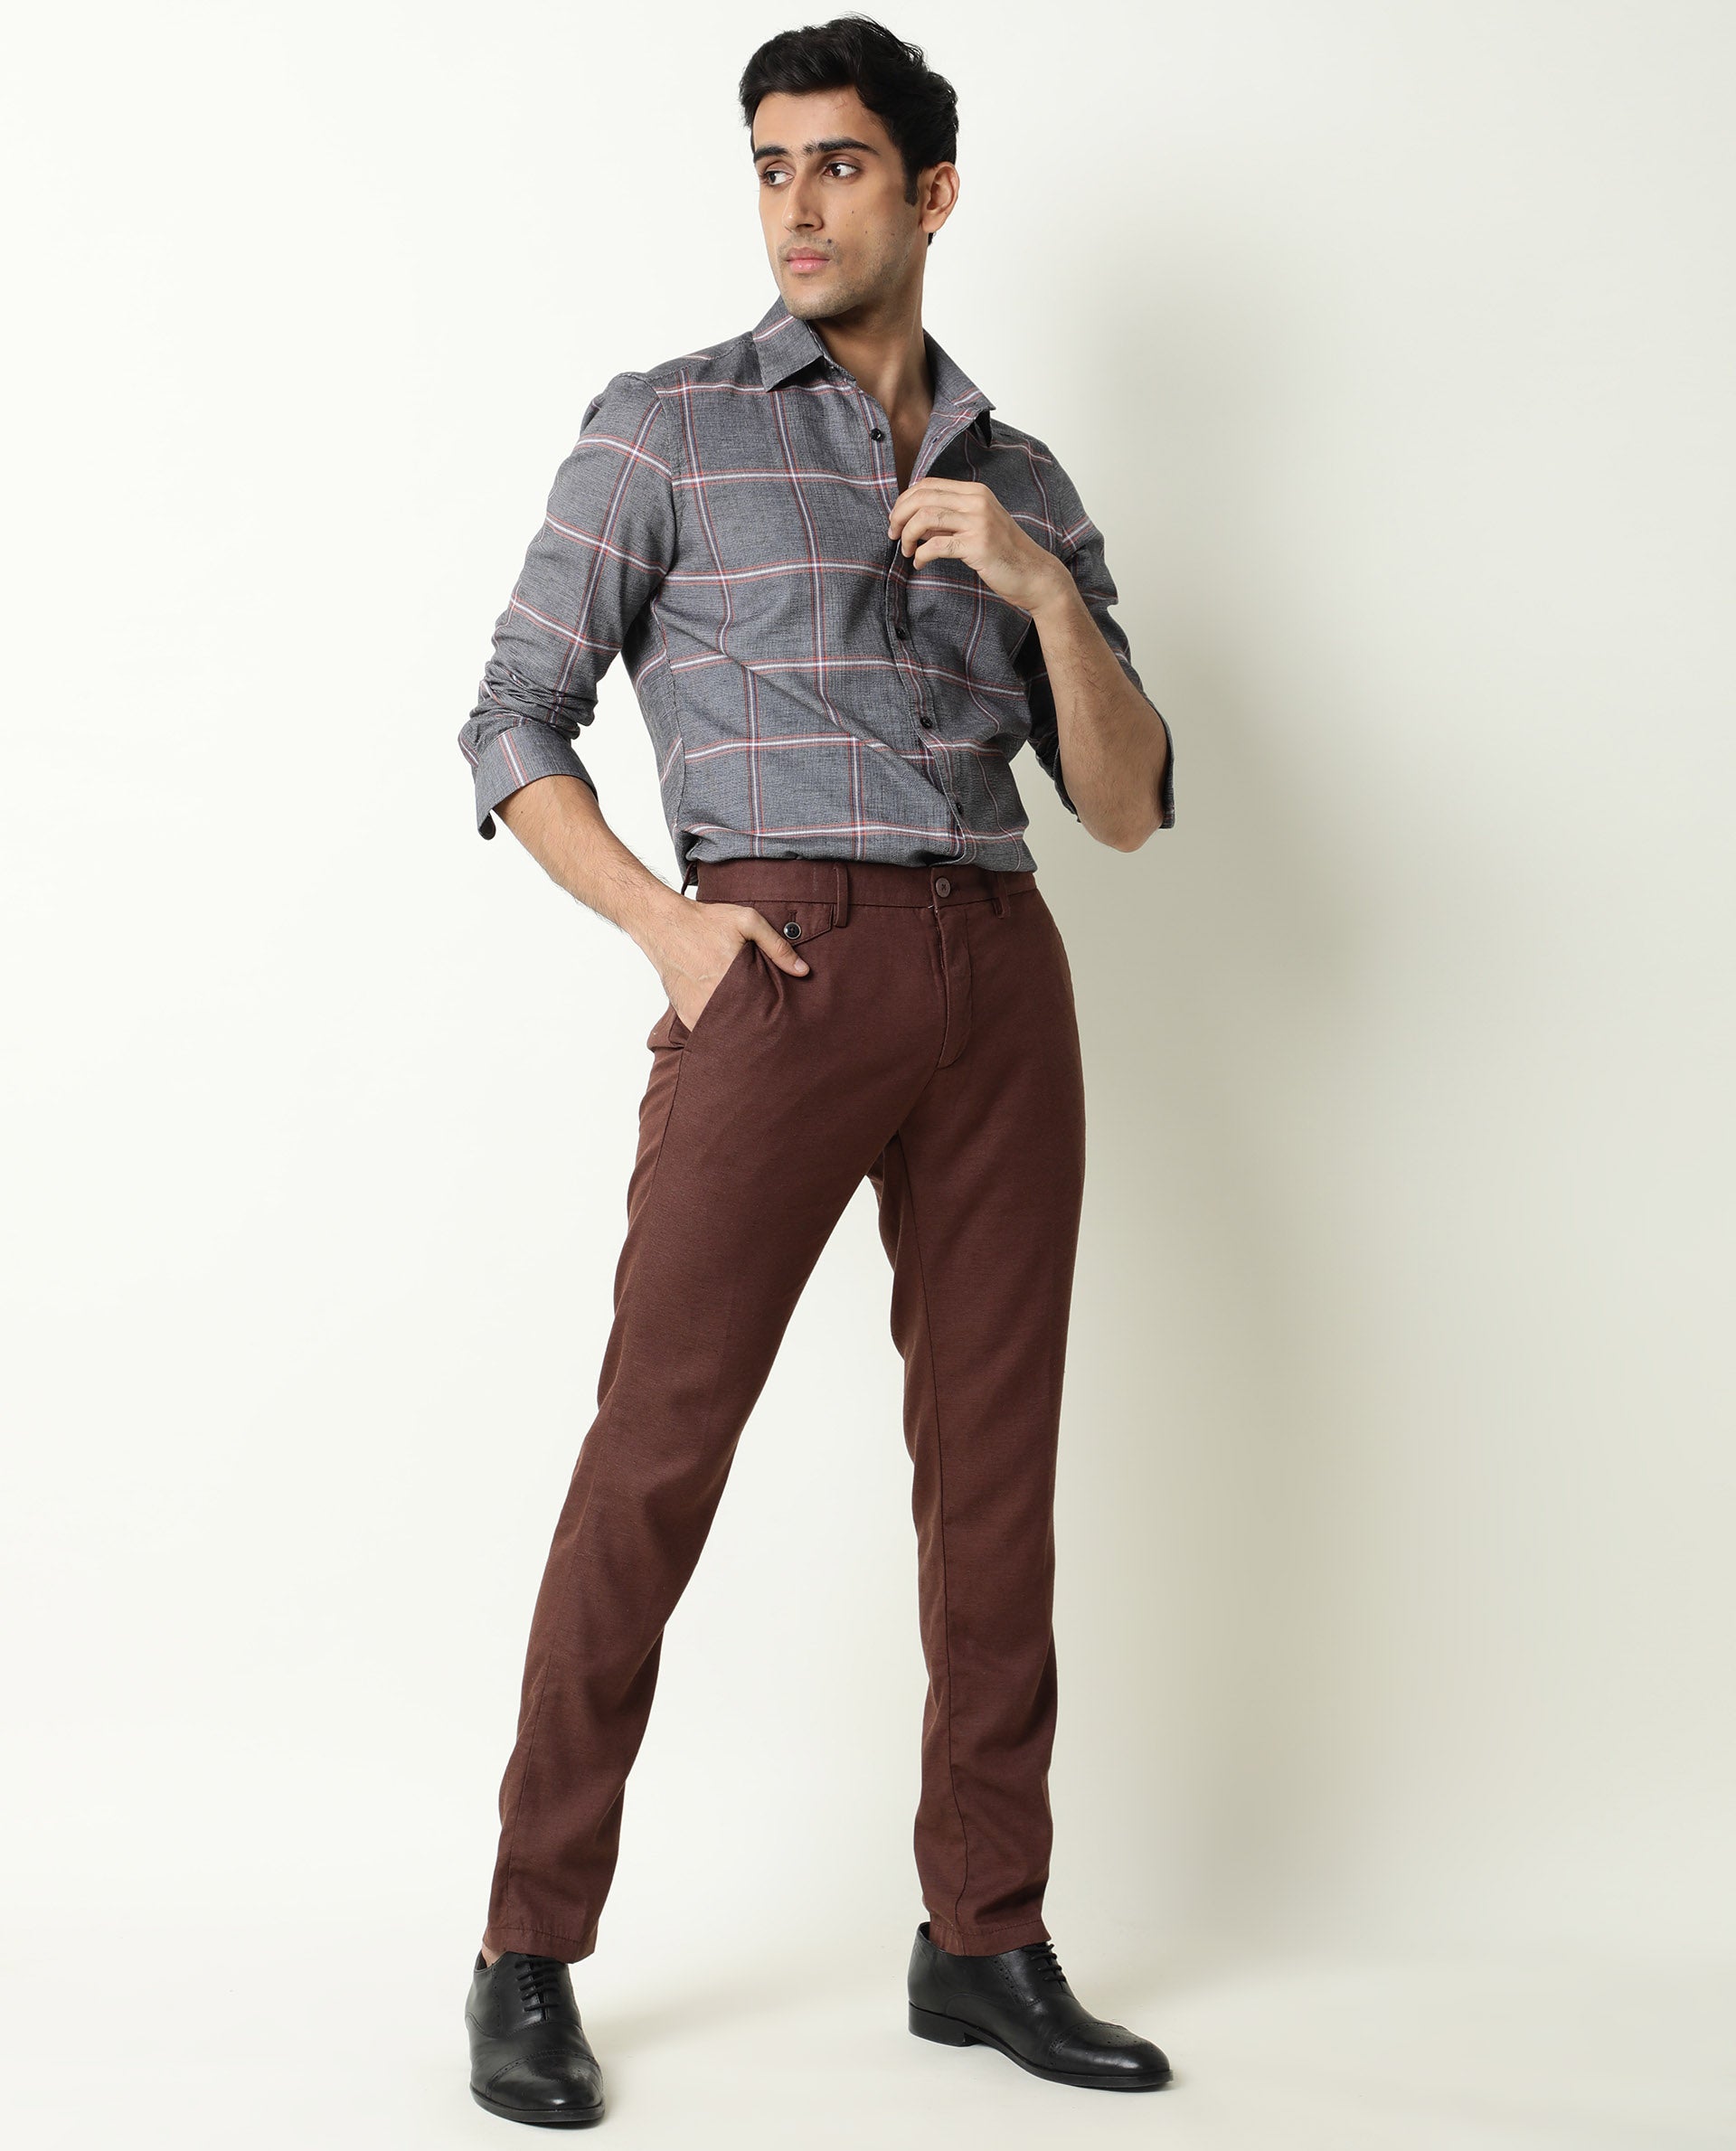 Maroon trousers  brown  Burgundy pants men Mens fashion summer Burgundy  pants outfit